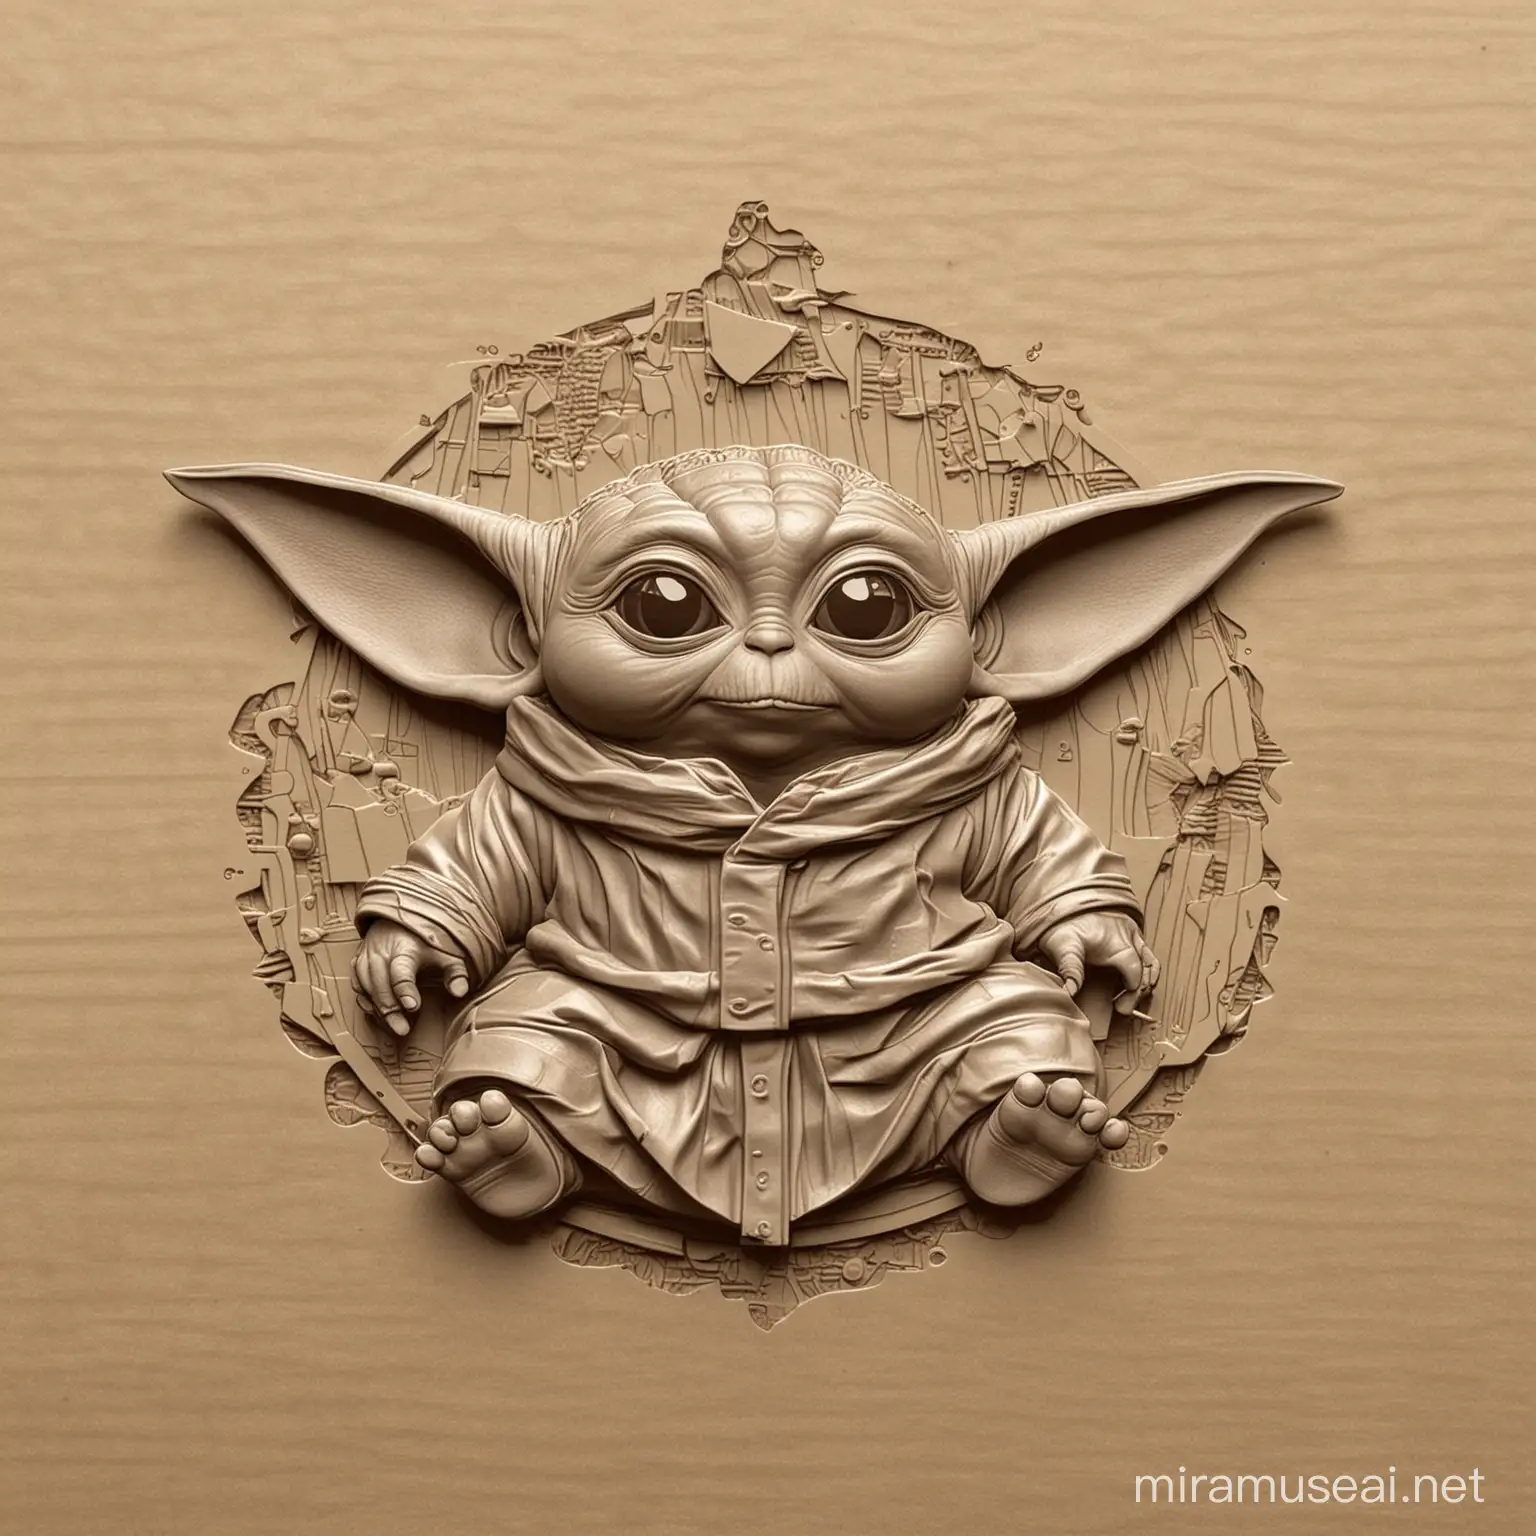 Adorable Baby Yoda Bass Relief Image for Laser Engraving